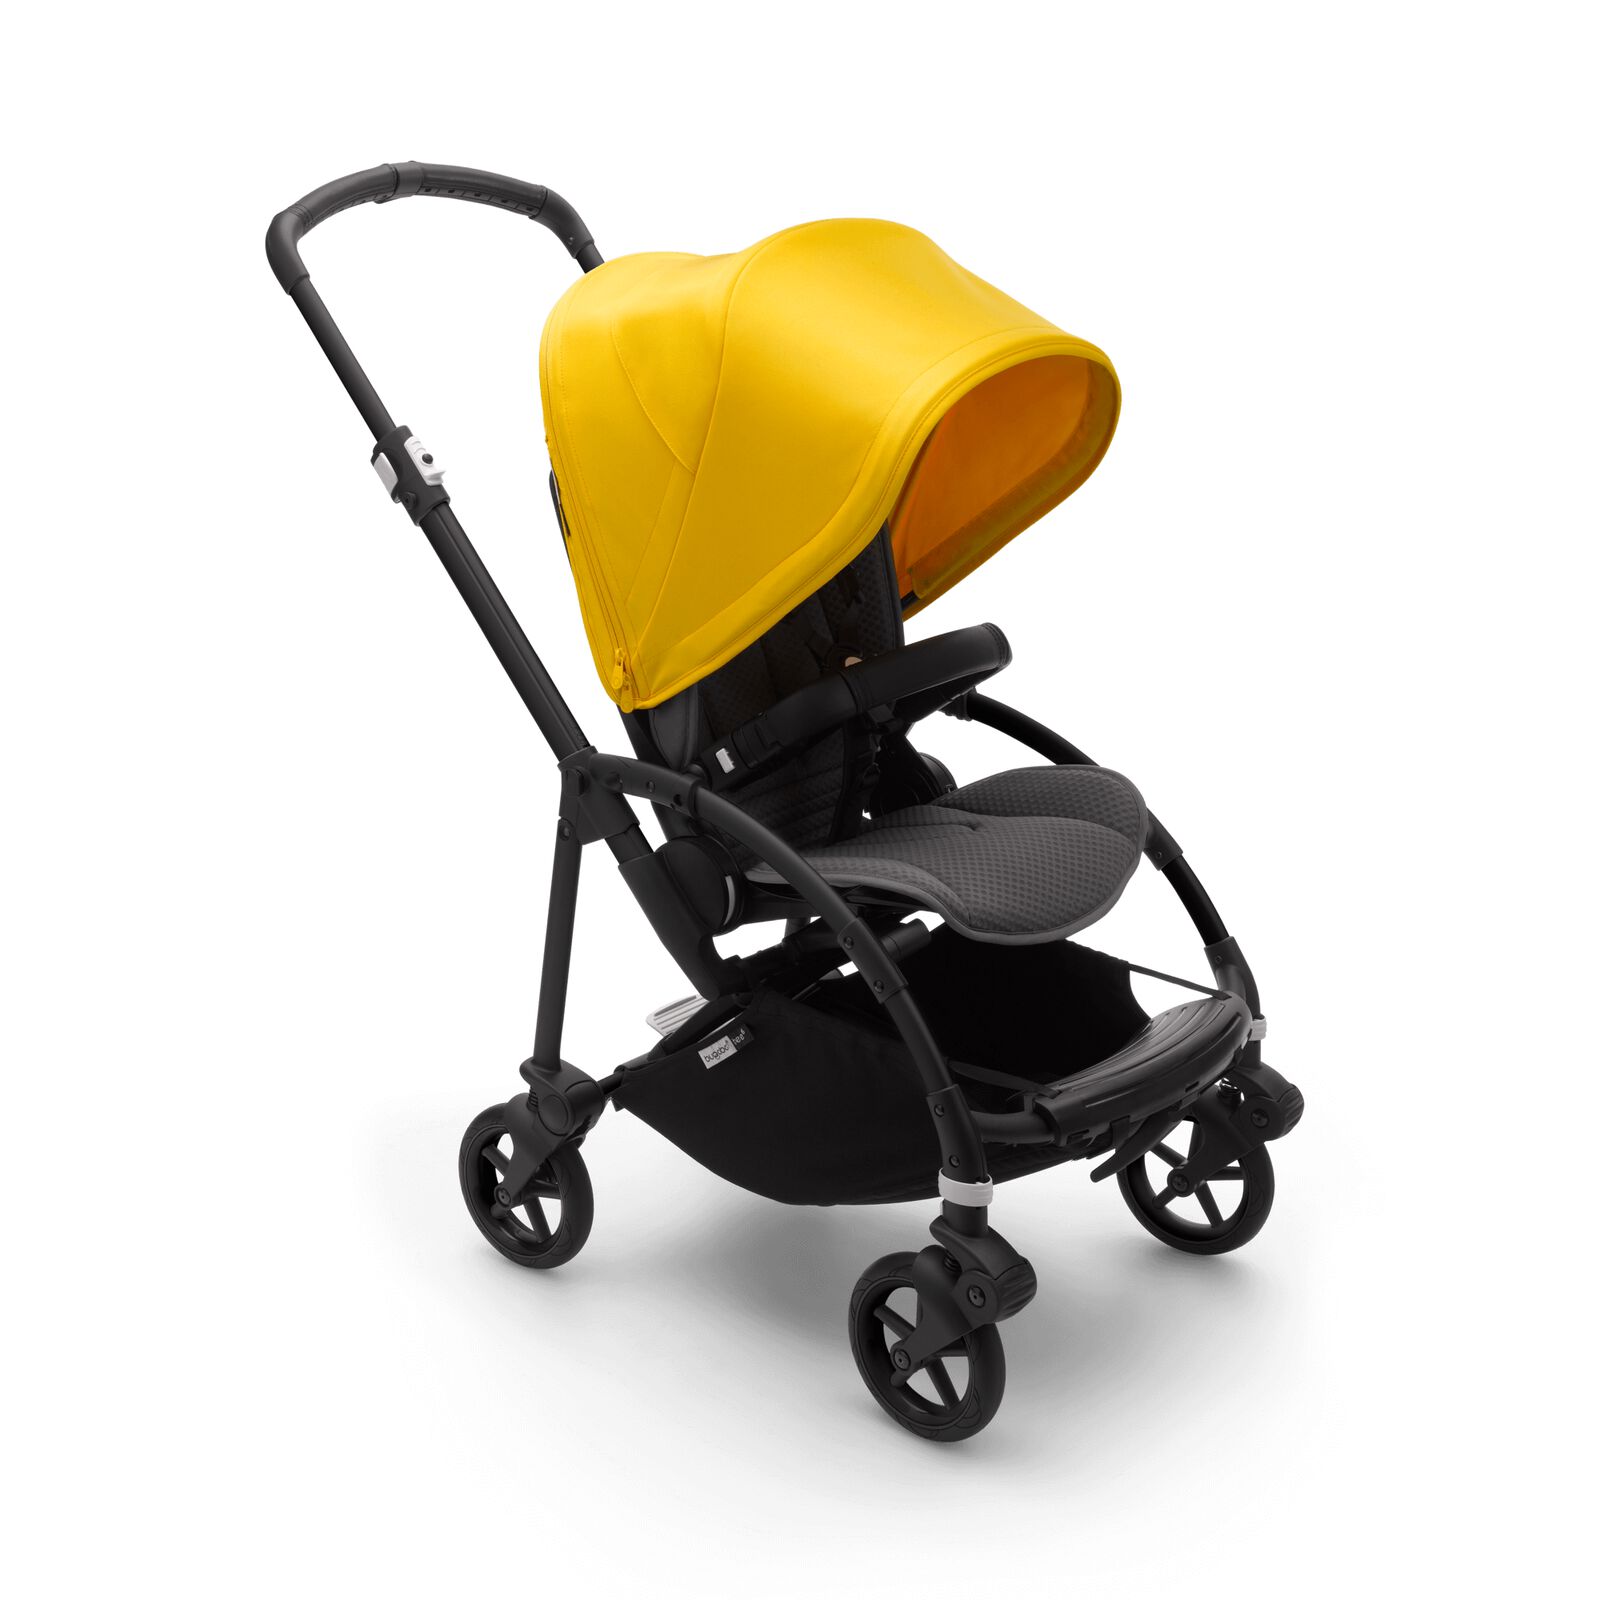 Bugaboo Bee 6 seat stroller lemon yellow sun canopy, grey mélange fabrics, black base